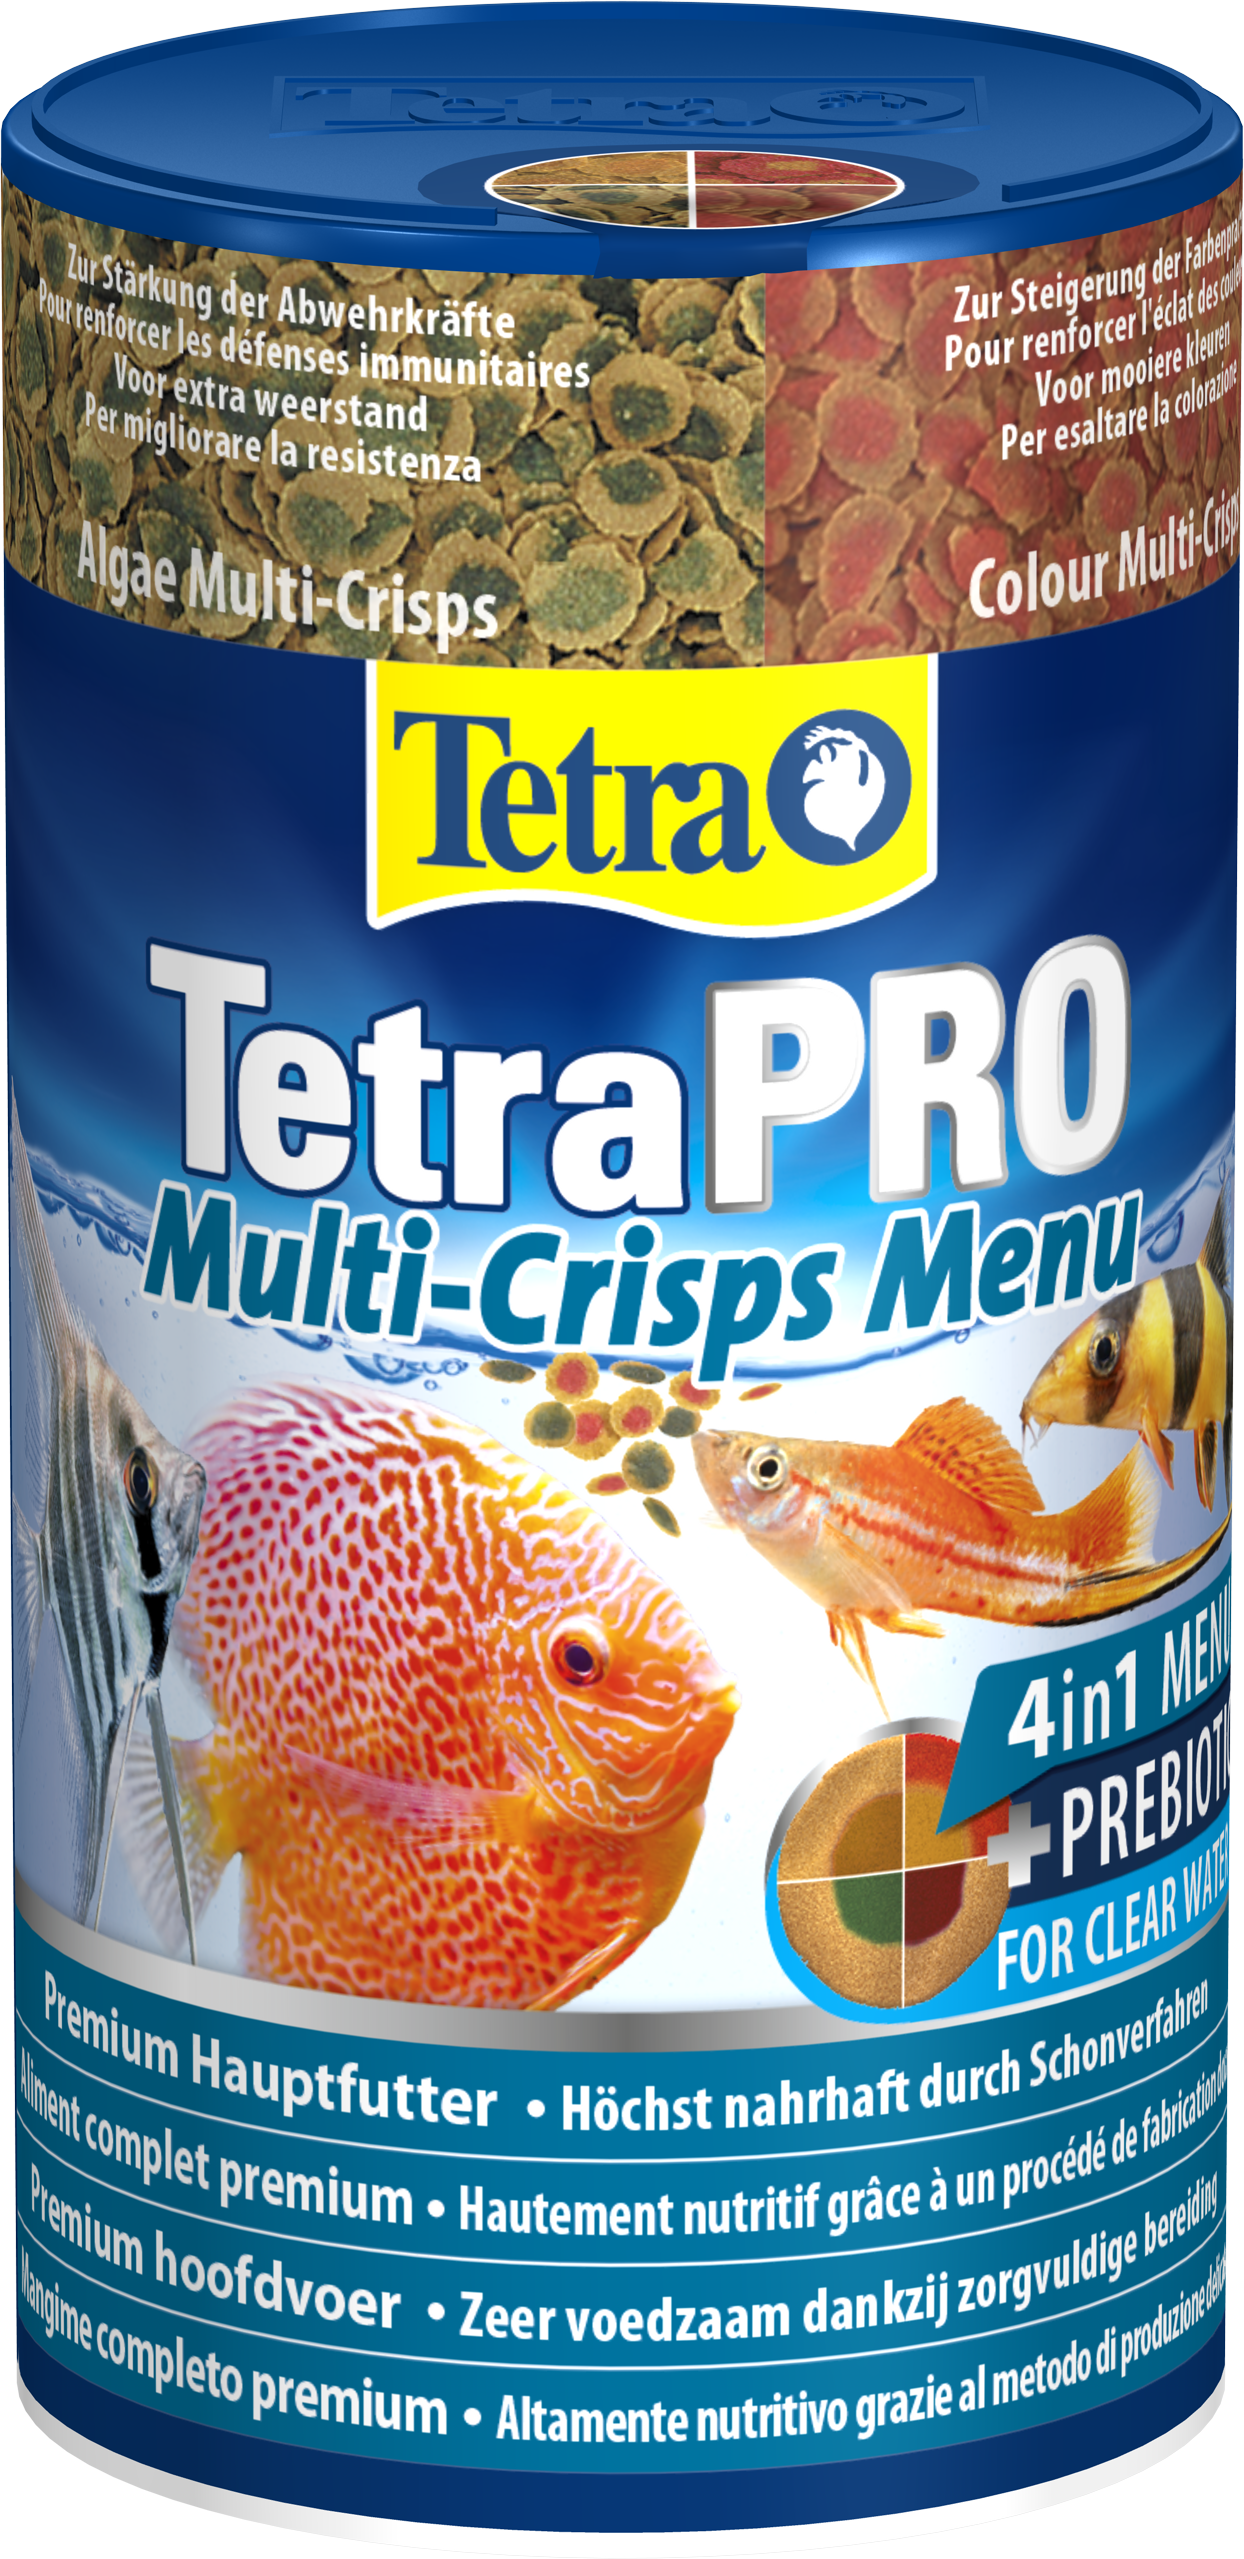 Tetra TetraPro Energy Multi-Crisps - Flingor - 500 ml - CyberZoo